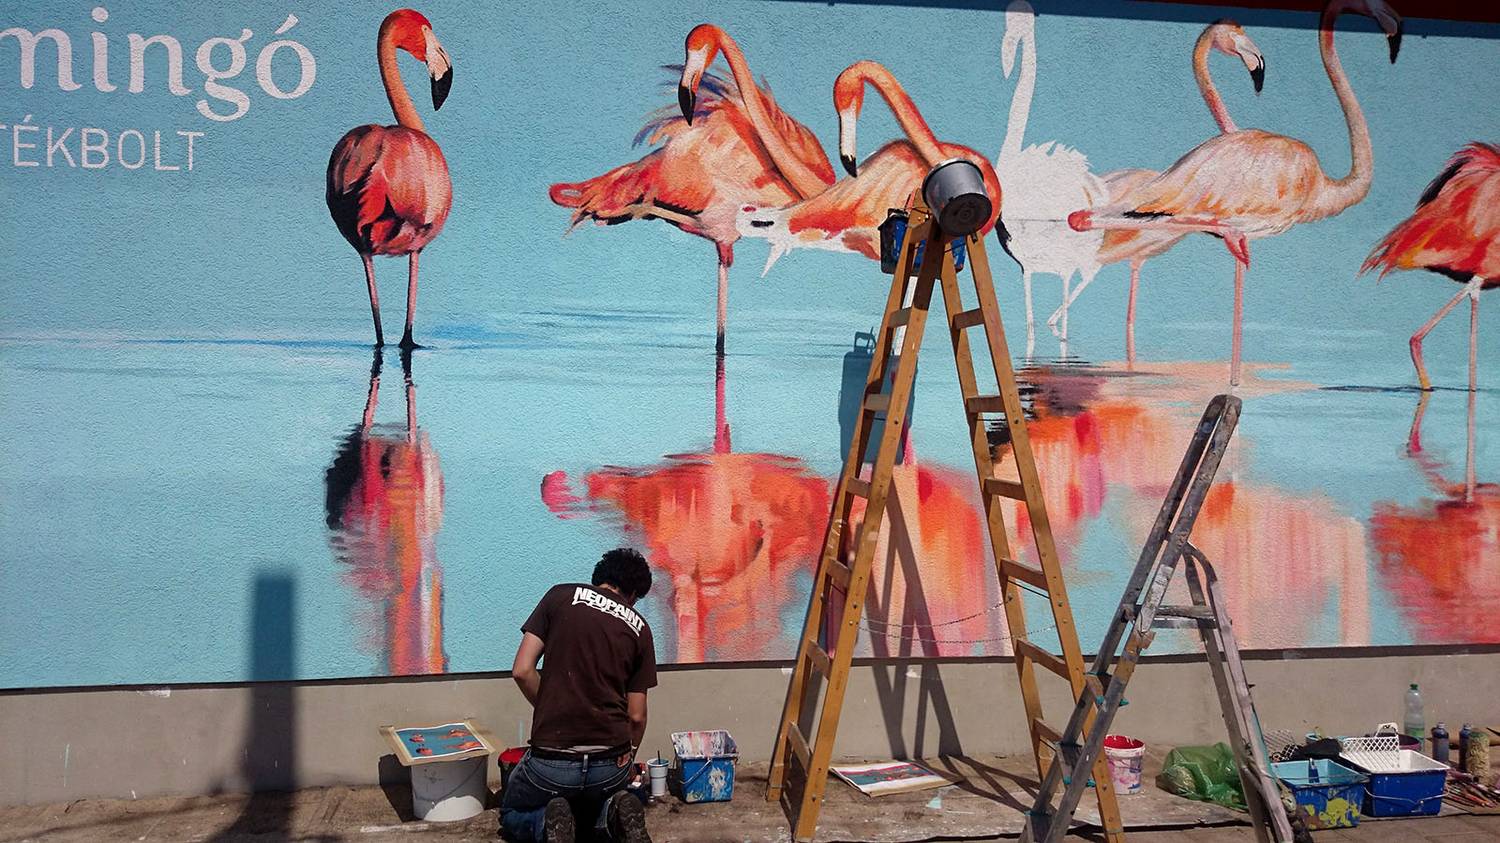 Flamingo- Neopaint Works